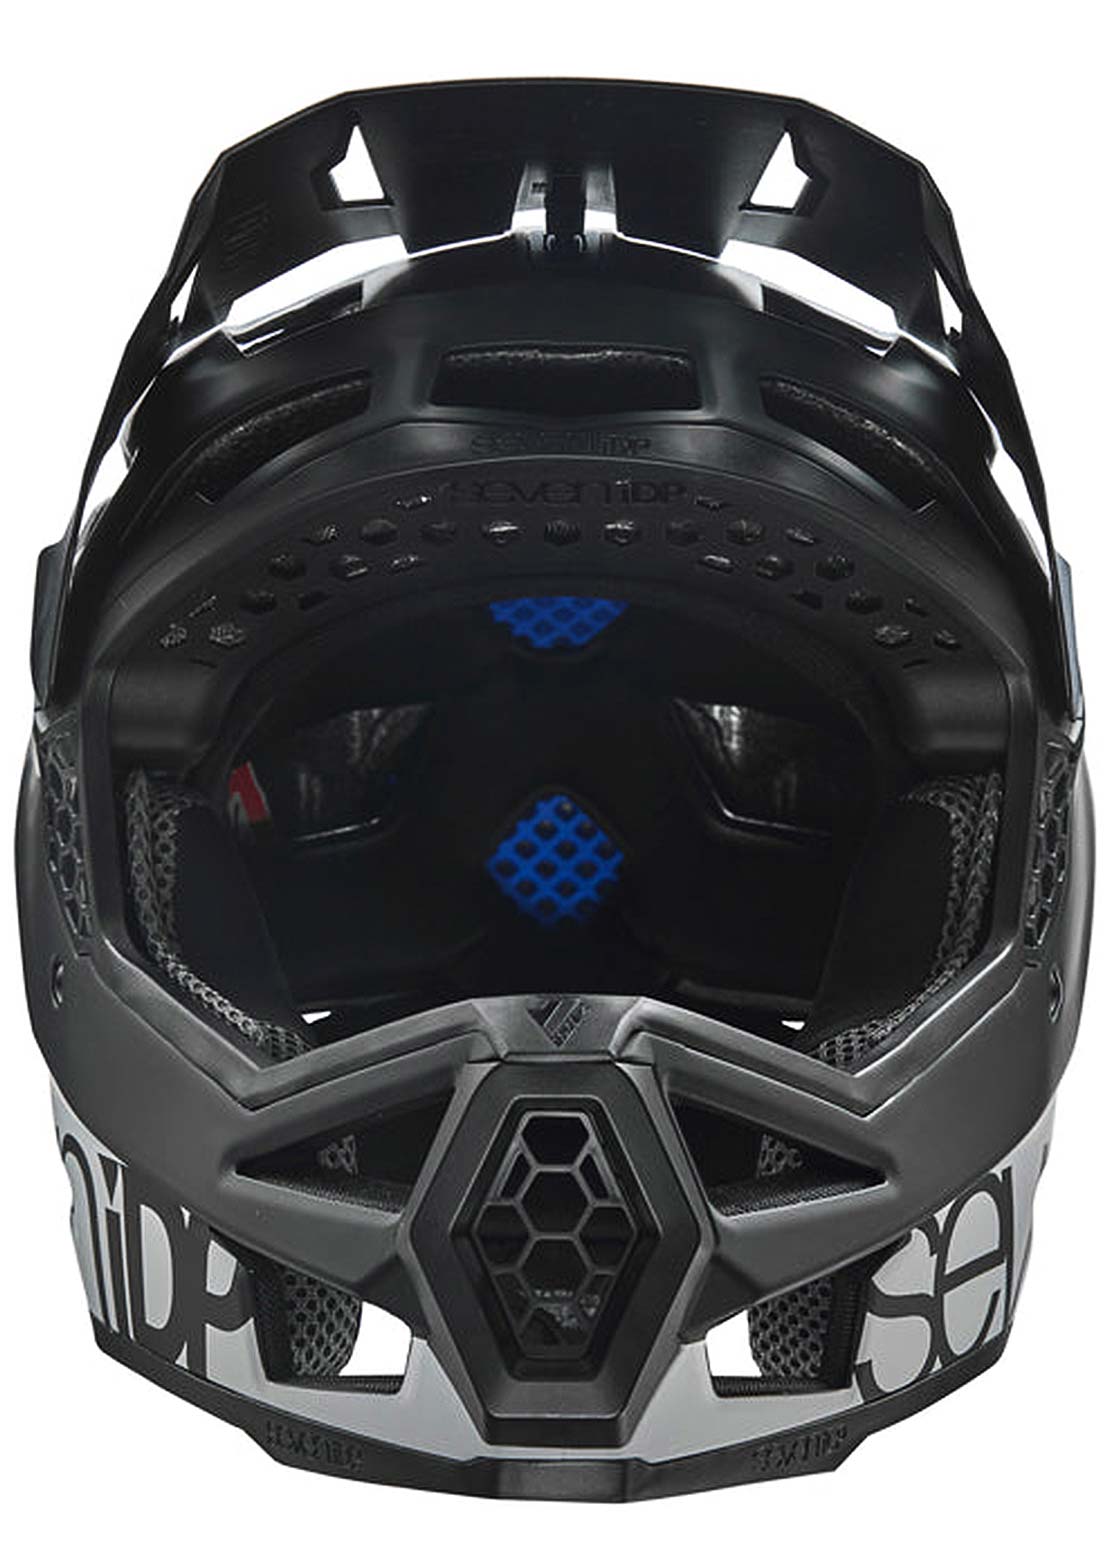 7iDP Project 23 Fiber Glass Downhill Helmet 61 - 62cm Graphite/Black